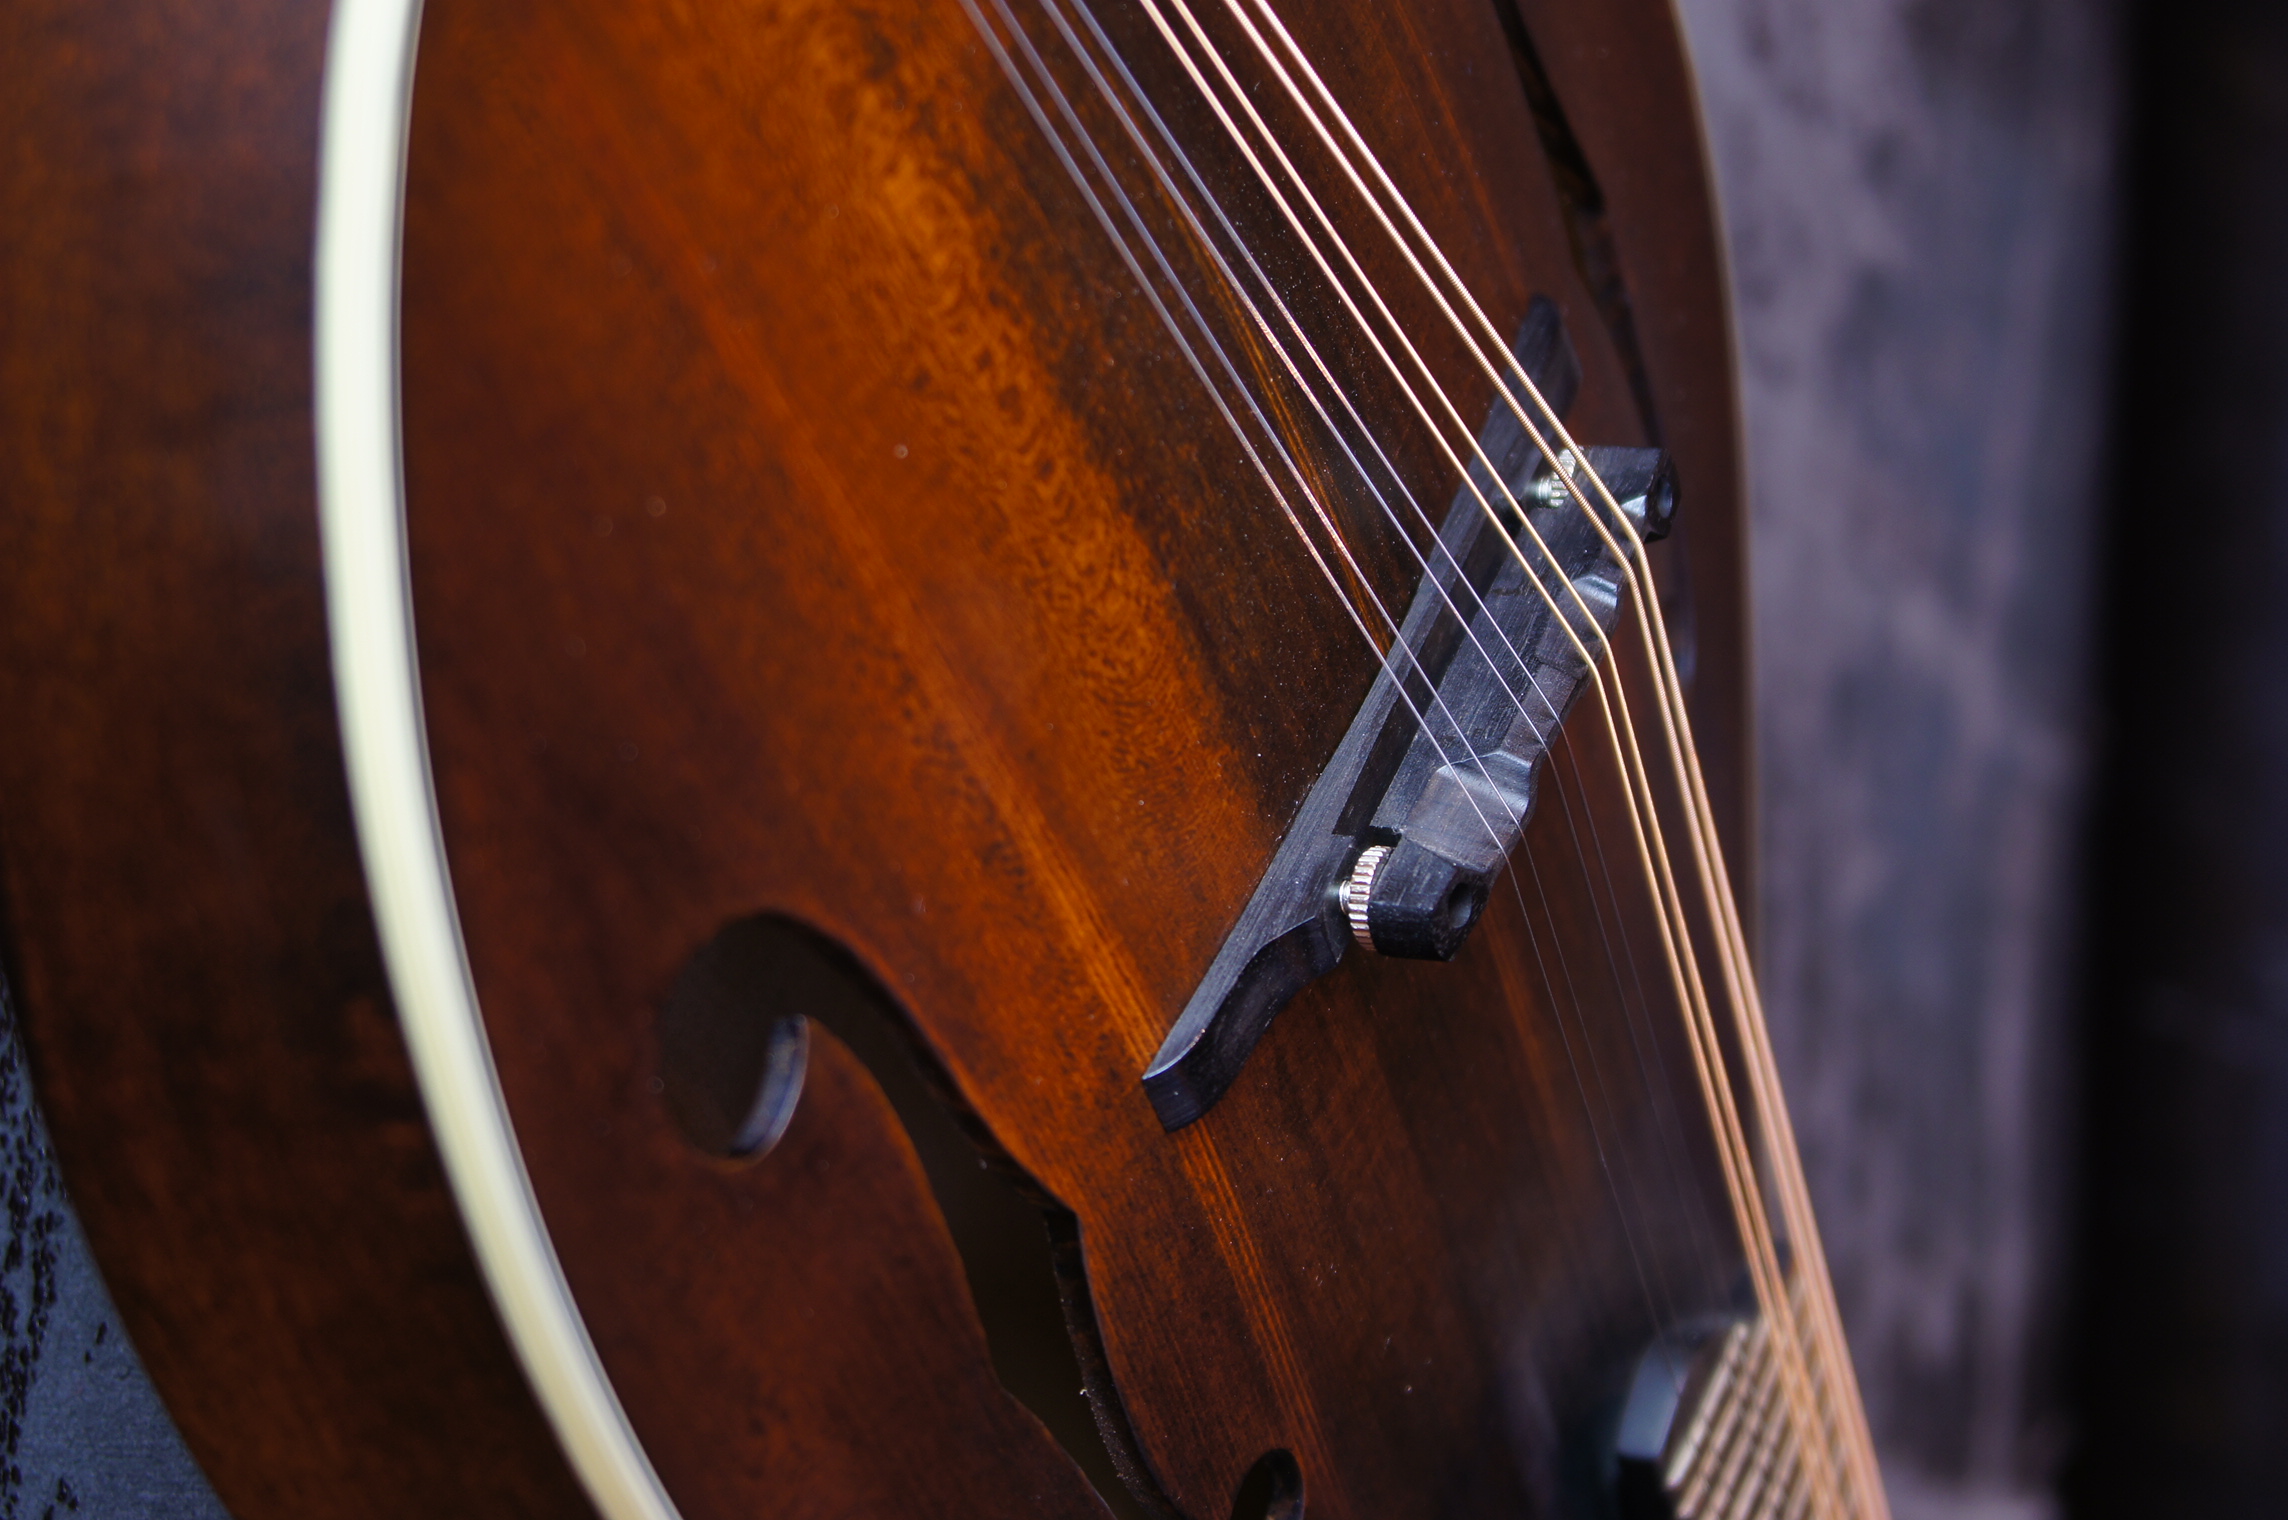 Eastman MD305 A-Style Mandoline